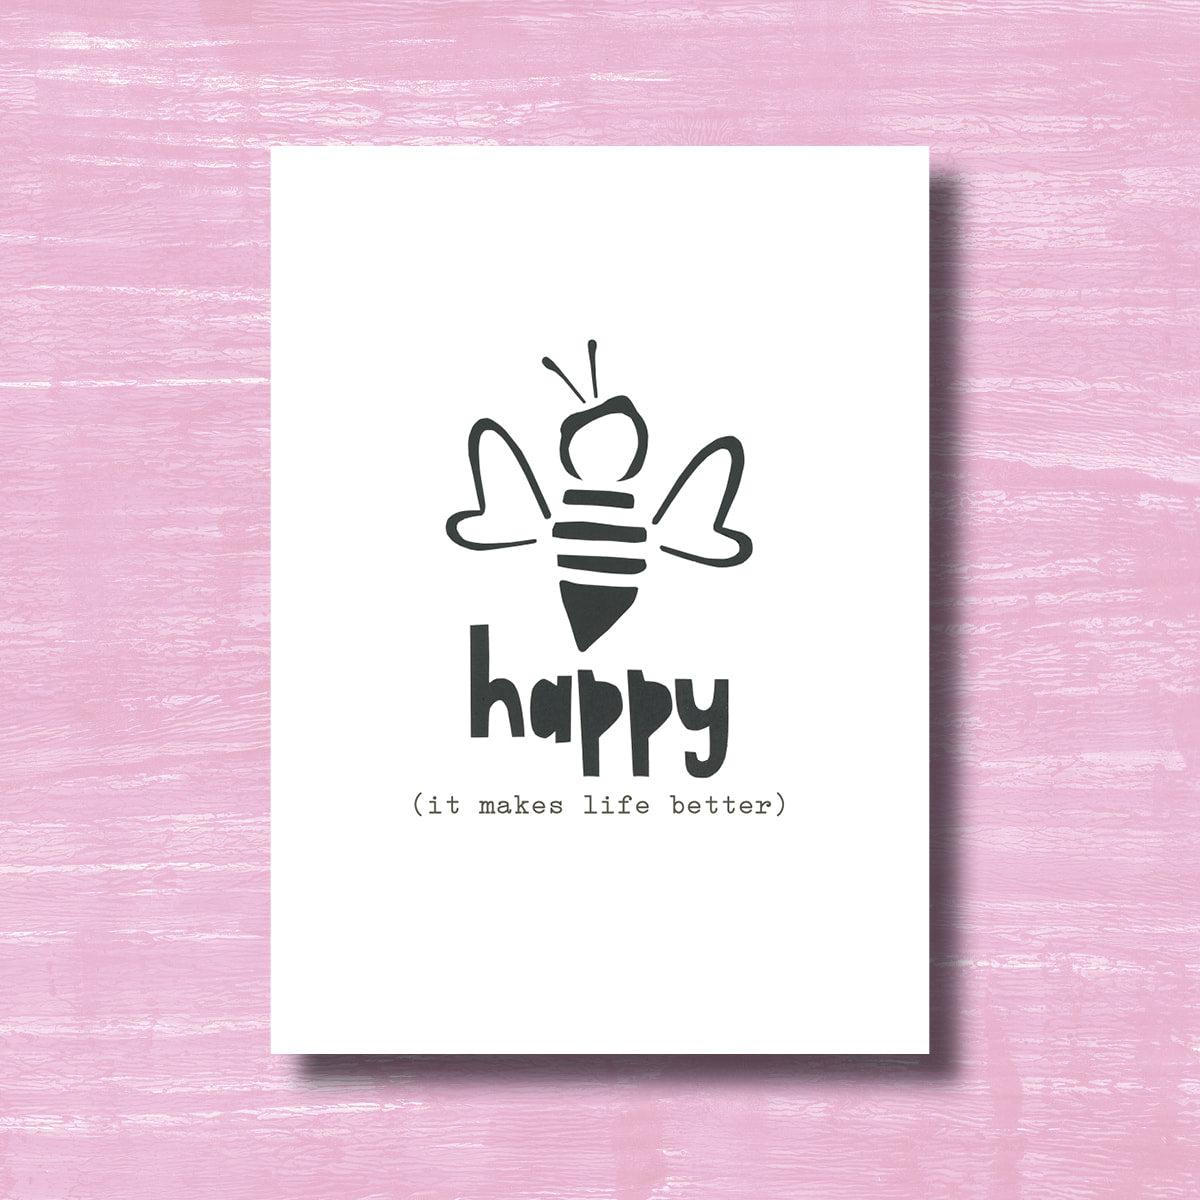 Bee Happy - greeting card